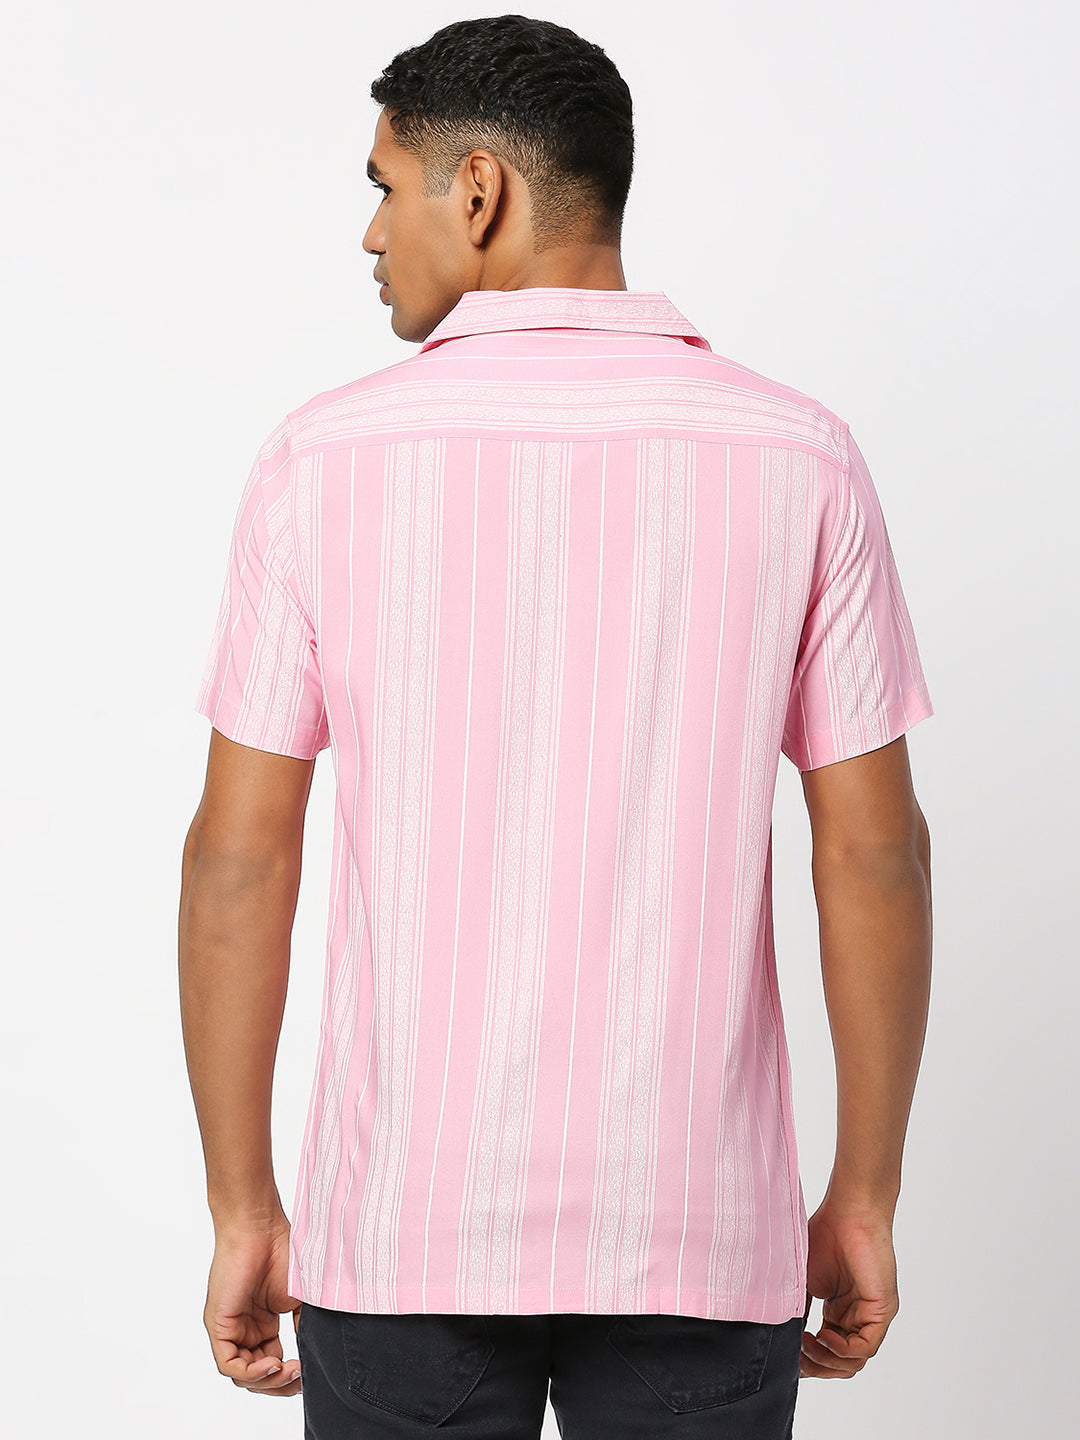 Sincerity Stripes Pink Shirt